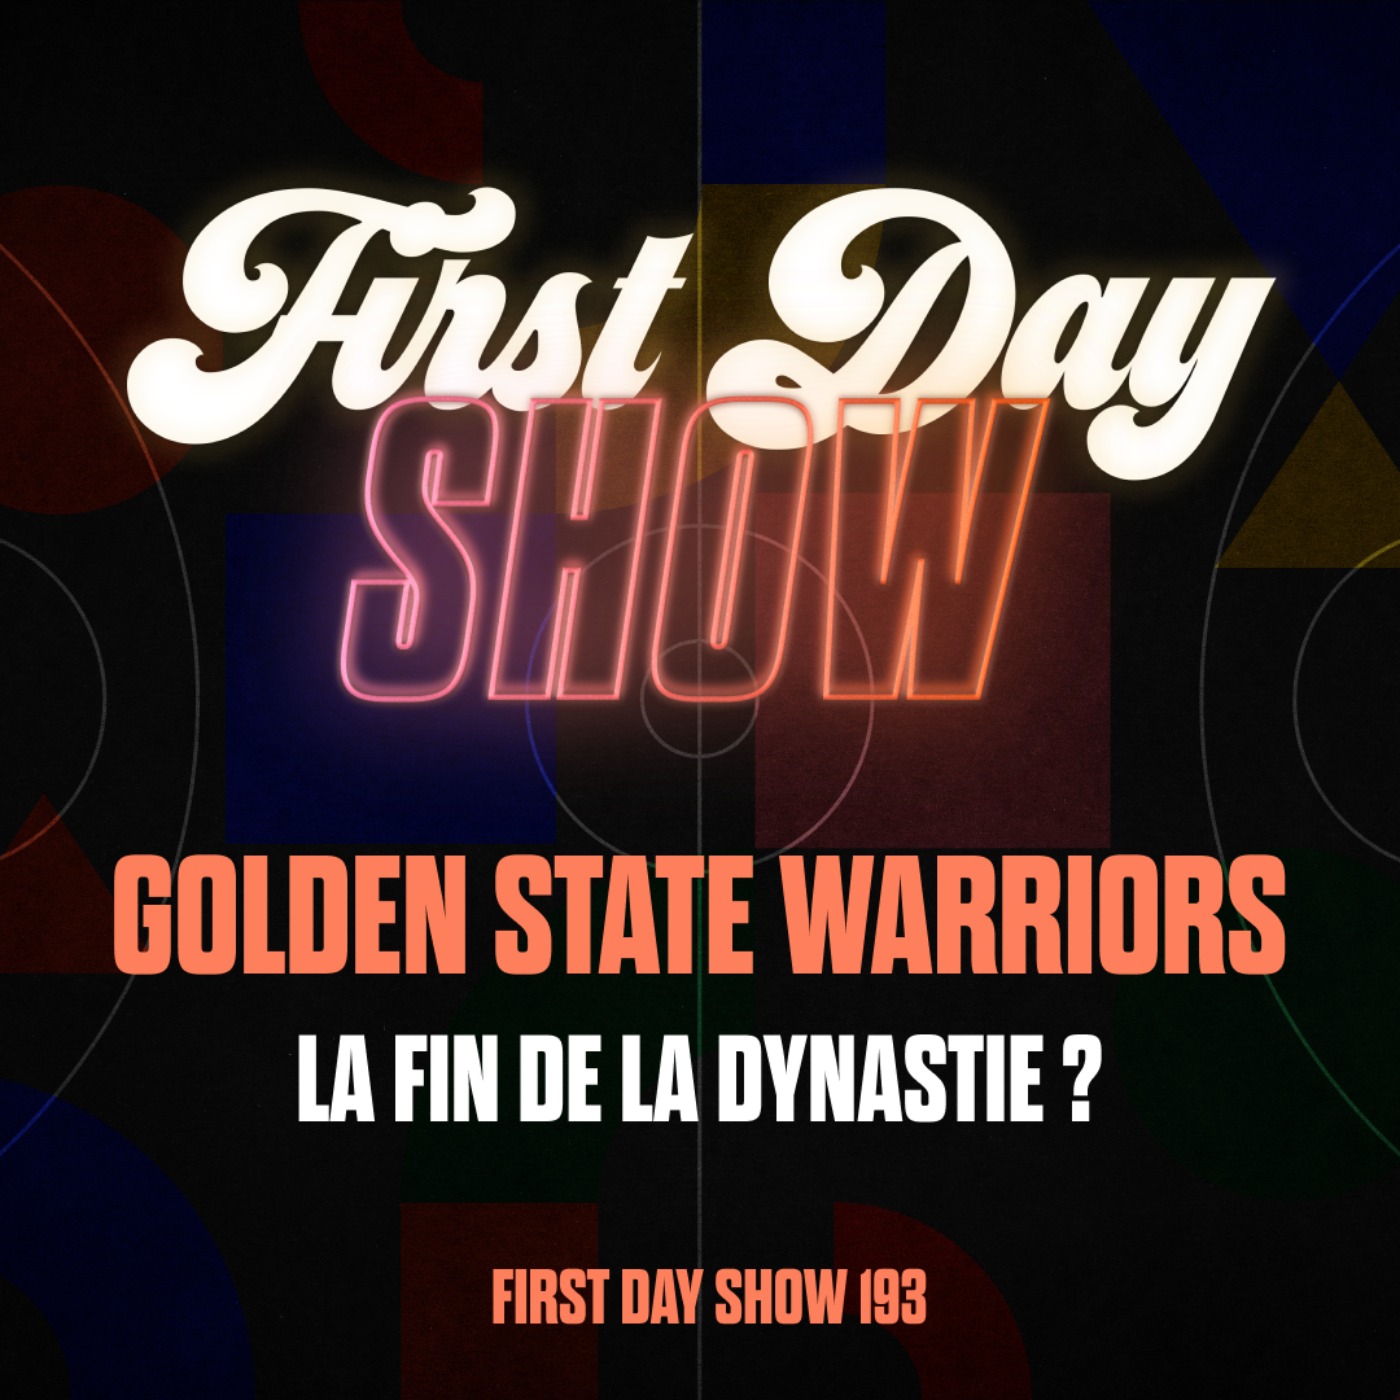 [NBA First Day Show] LA FIN DE LA DYNASTIE DES WARRIORS ?